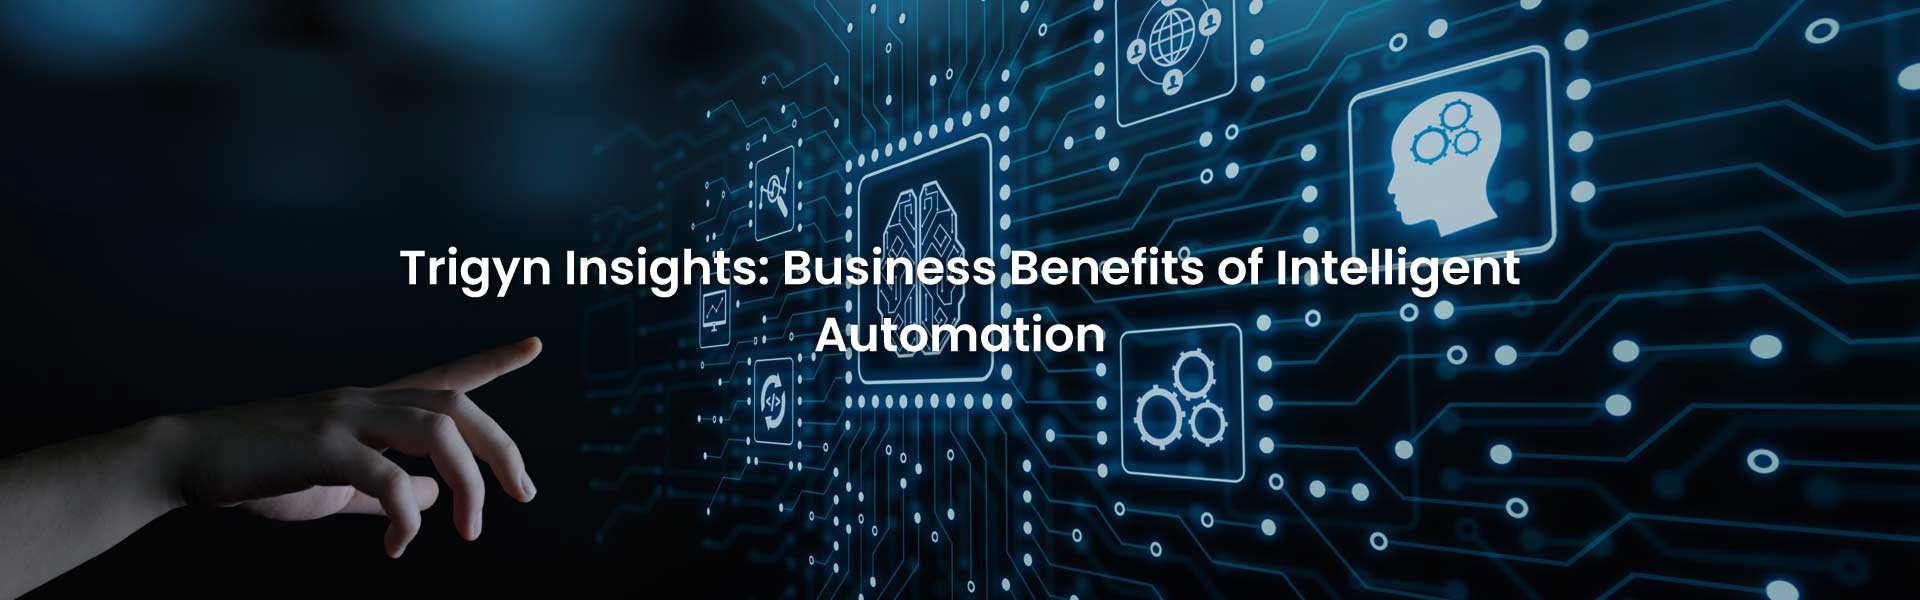 Business Benefits of Intelligent Automation 